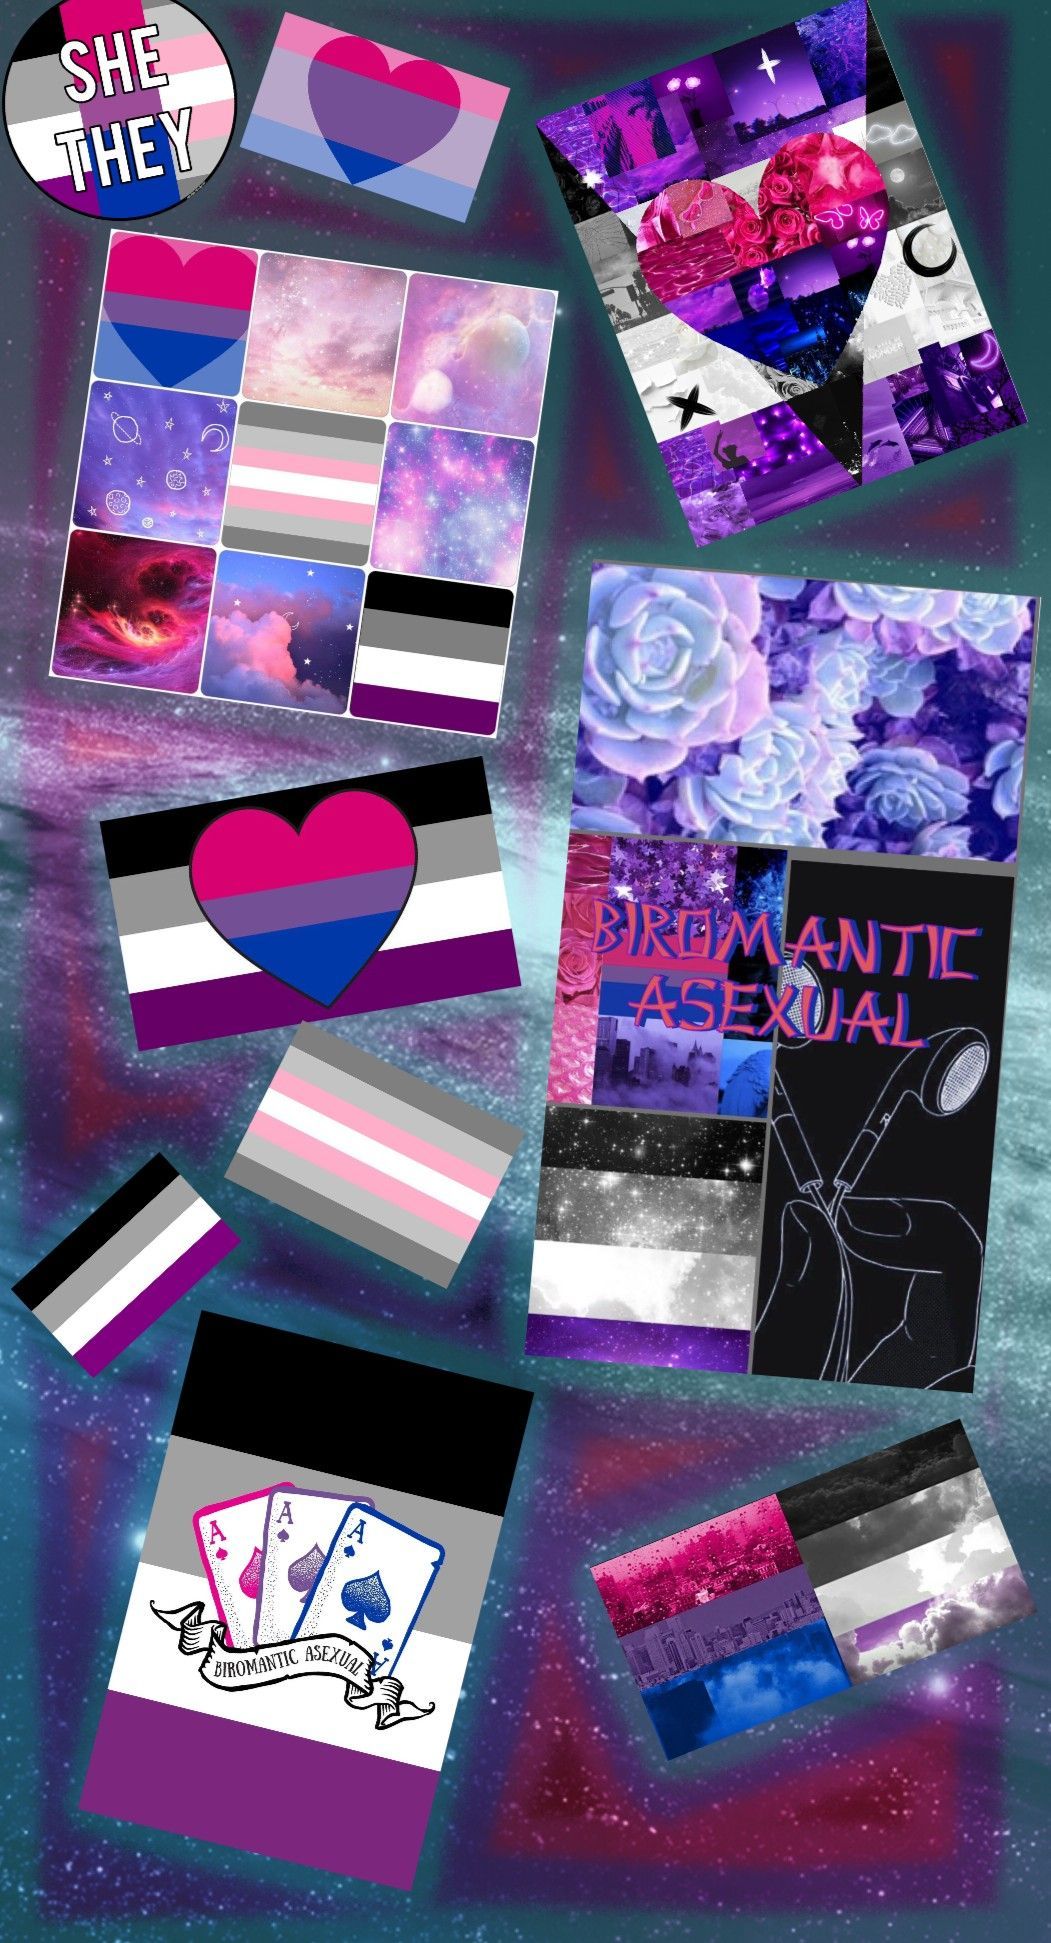 Bisexual wallpaper iphone aesthetic